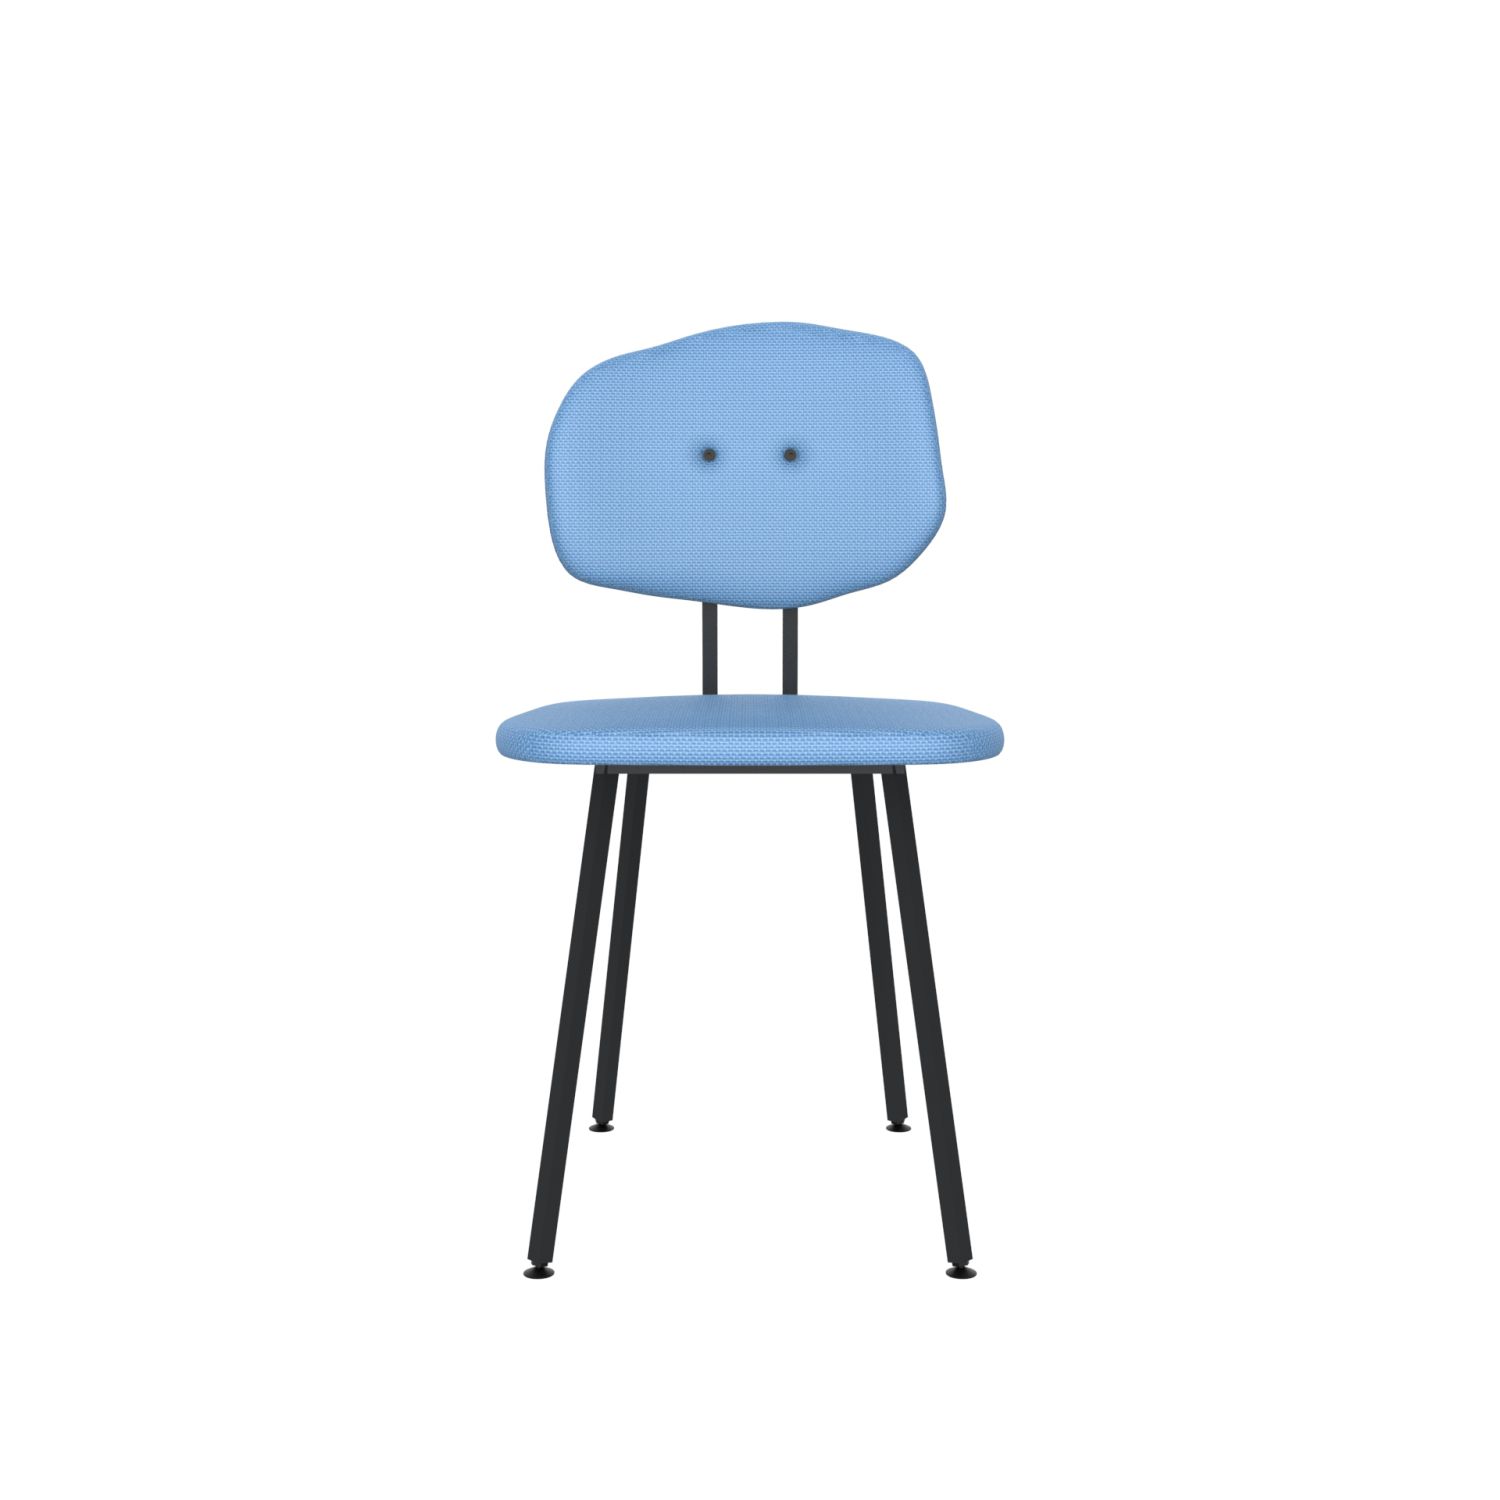 lensvelt maarten baas chair 101 not stackable without armrests backrest e blue horizon 040 black ral9005 hard leg ends